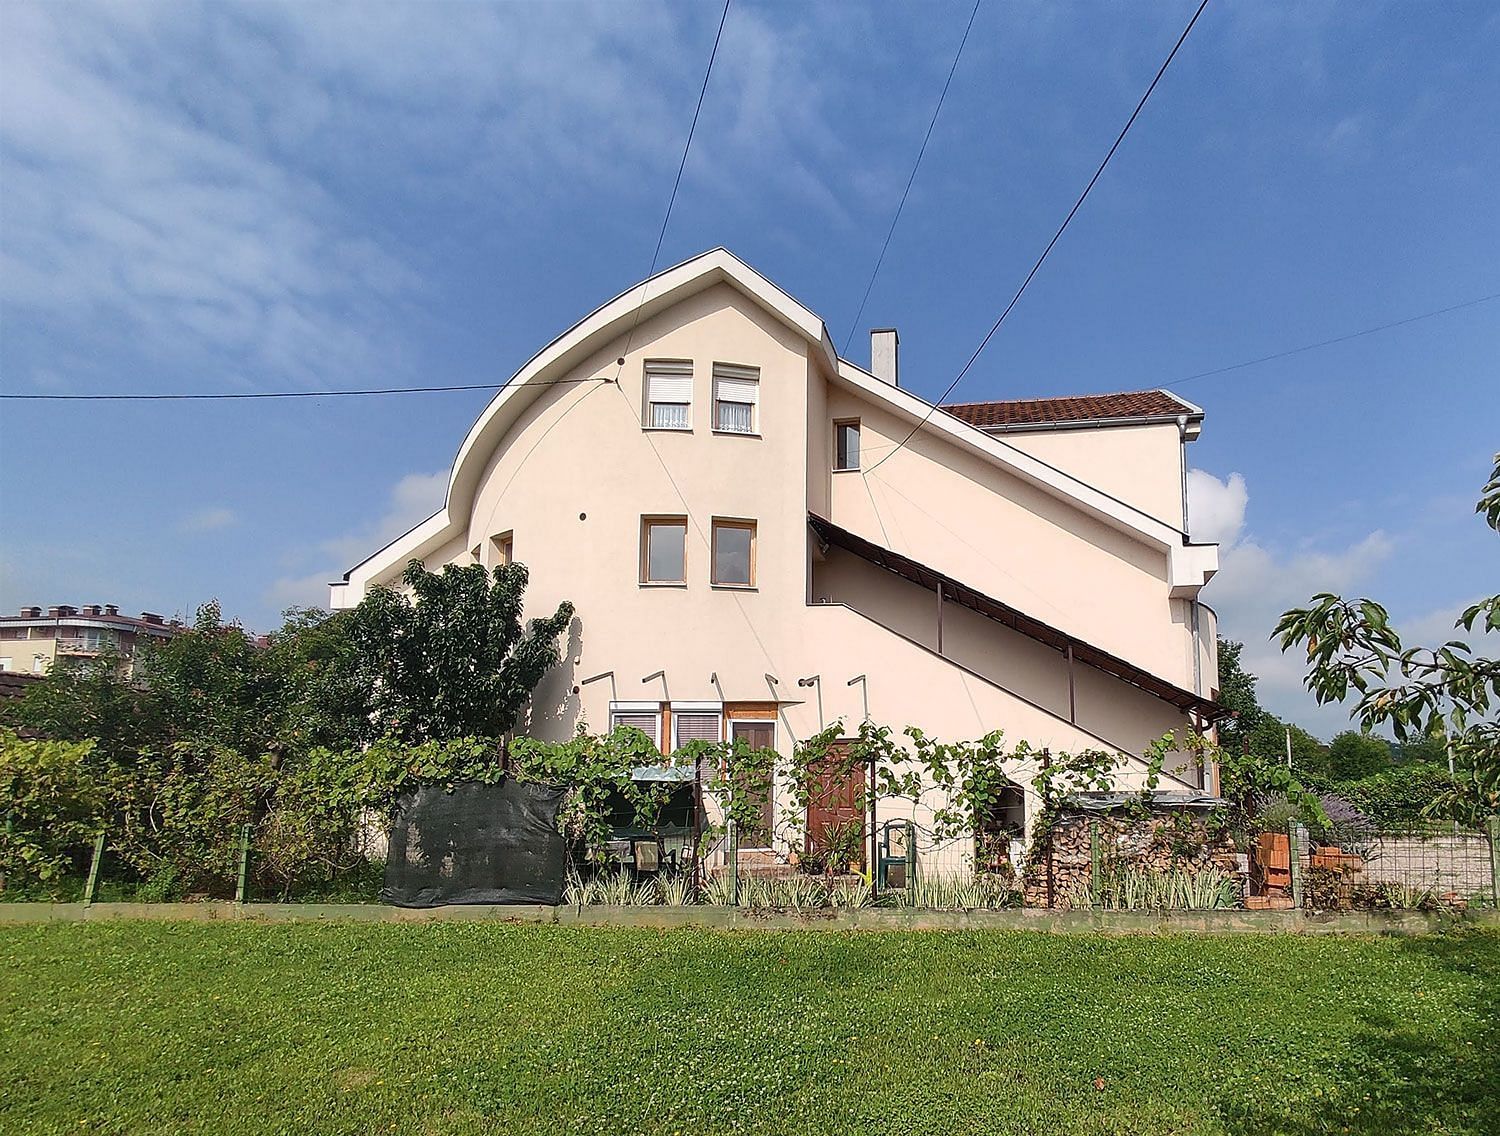 JWguest Apartment at Banja Luka, Republika Srpska | Rustic apartment and lounge for socializing | Jwbnb no brobnb 2